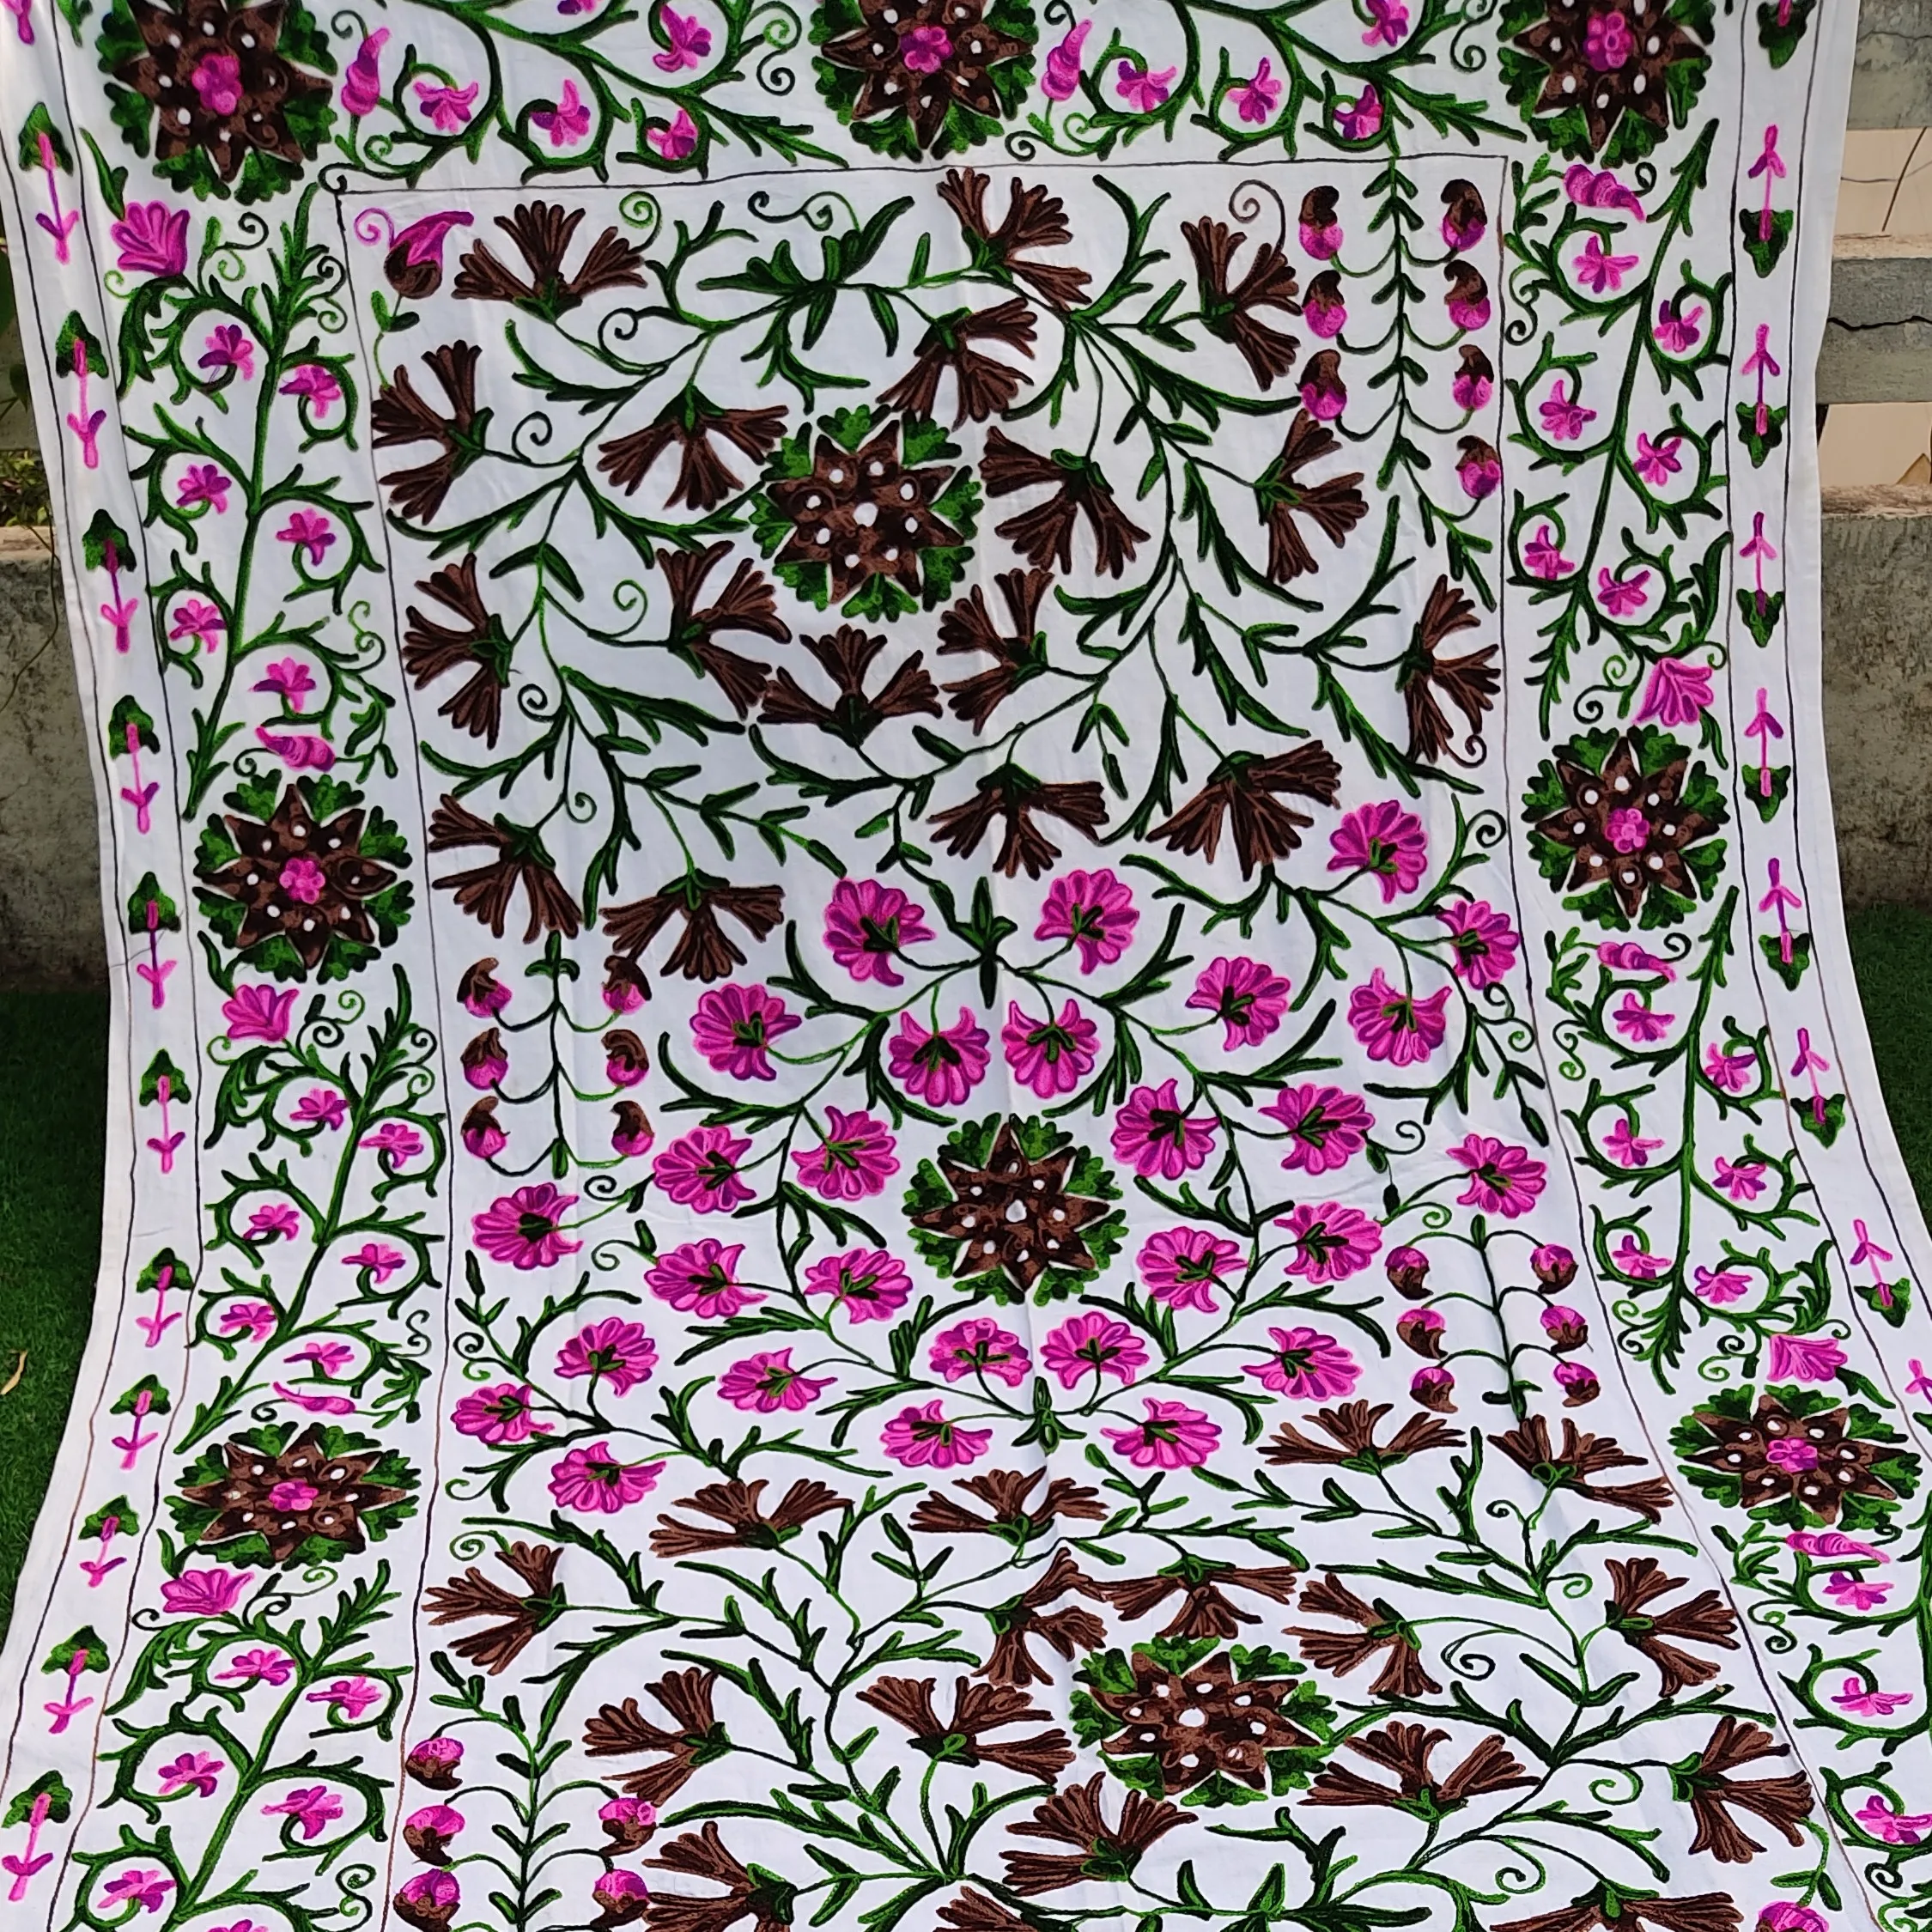 Design Bedsheet Floral Embroidered Throw Blanket Bedroom Home Decor Bedcover Cotton All Size Bedspread